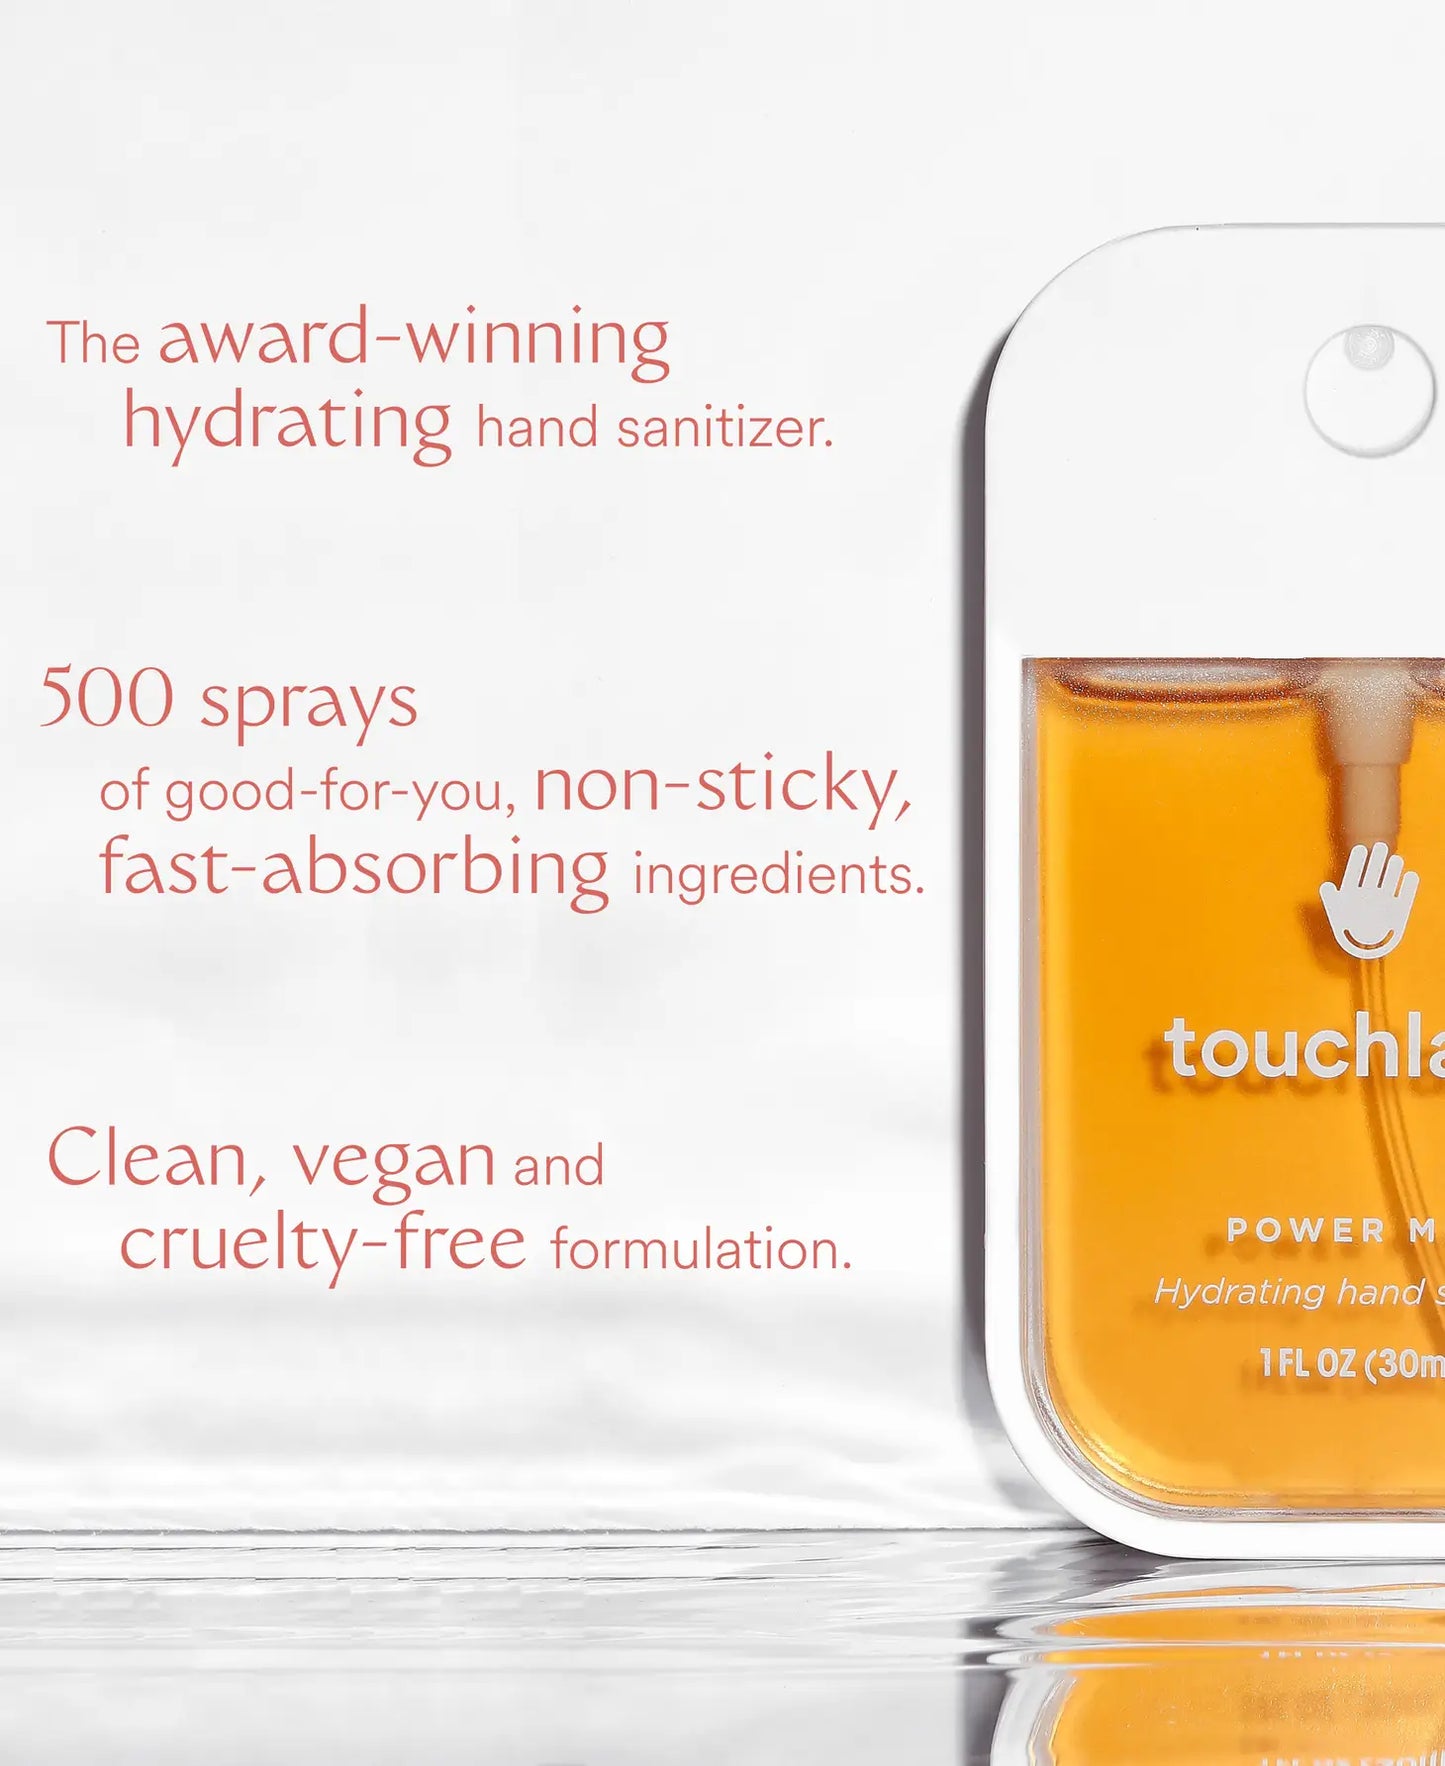 Touchland Power Mist Citrus Grove Hand Sanitizer